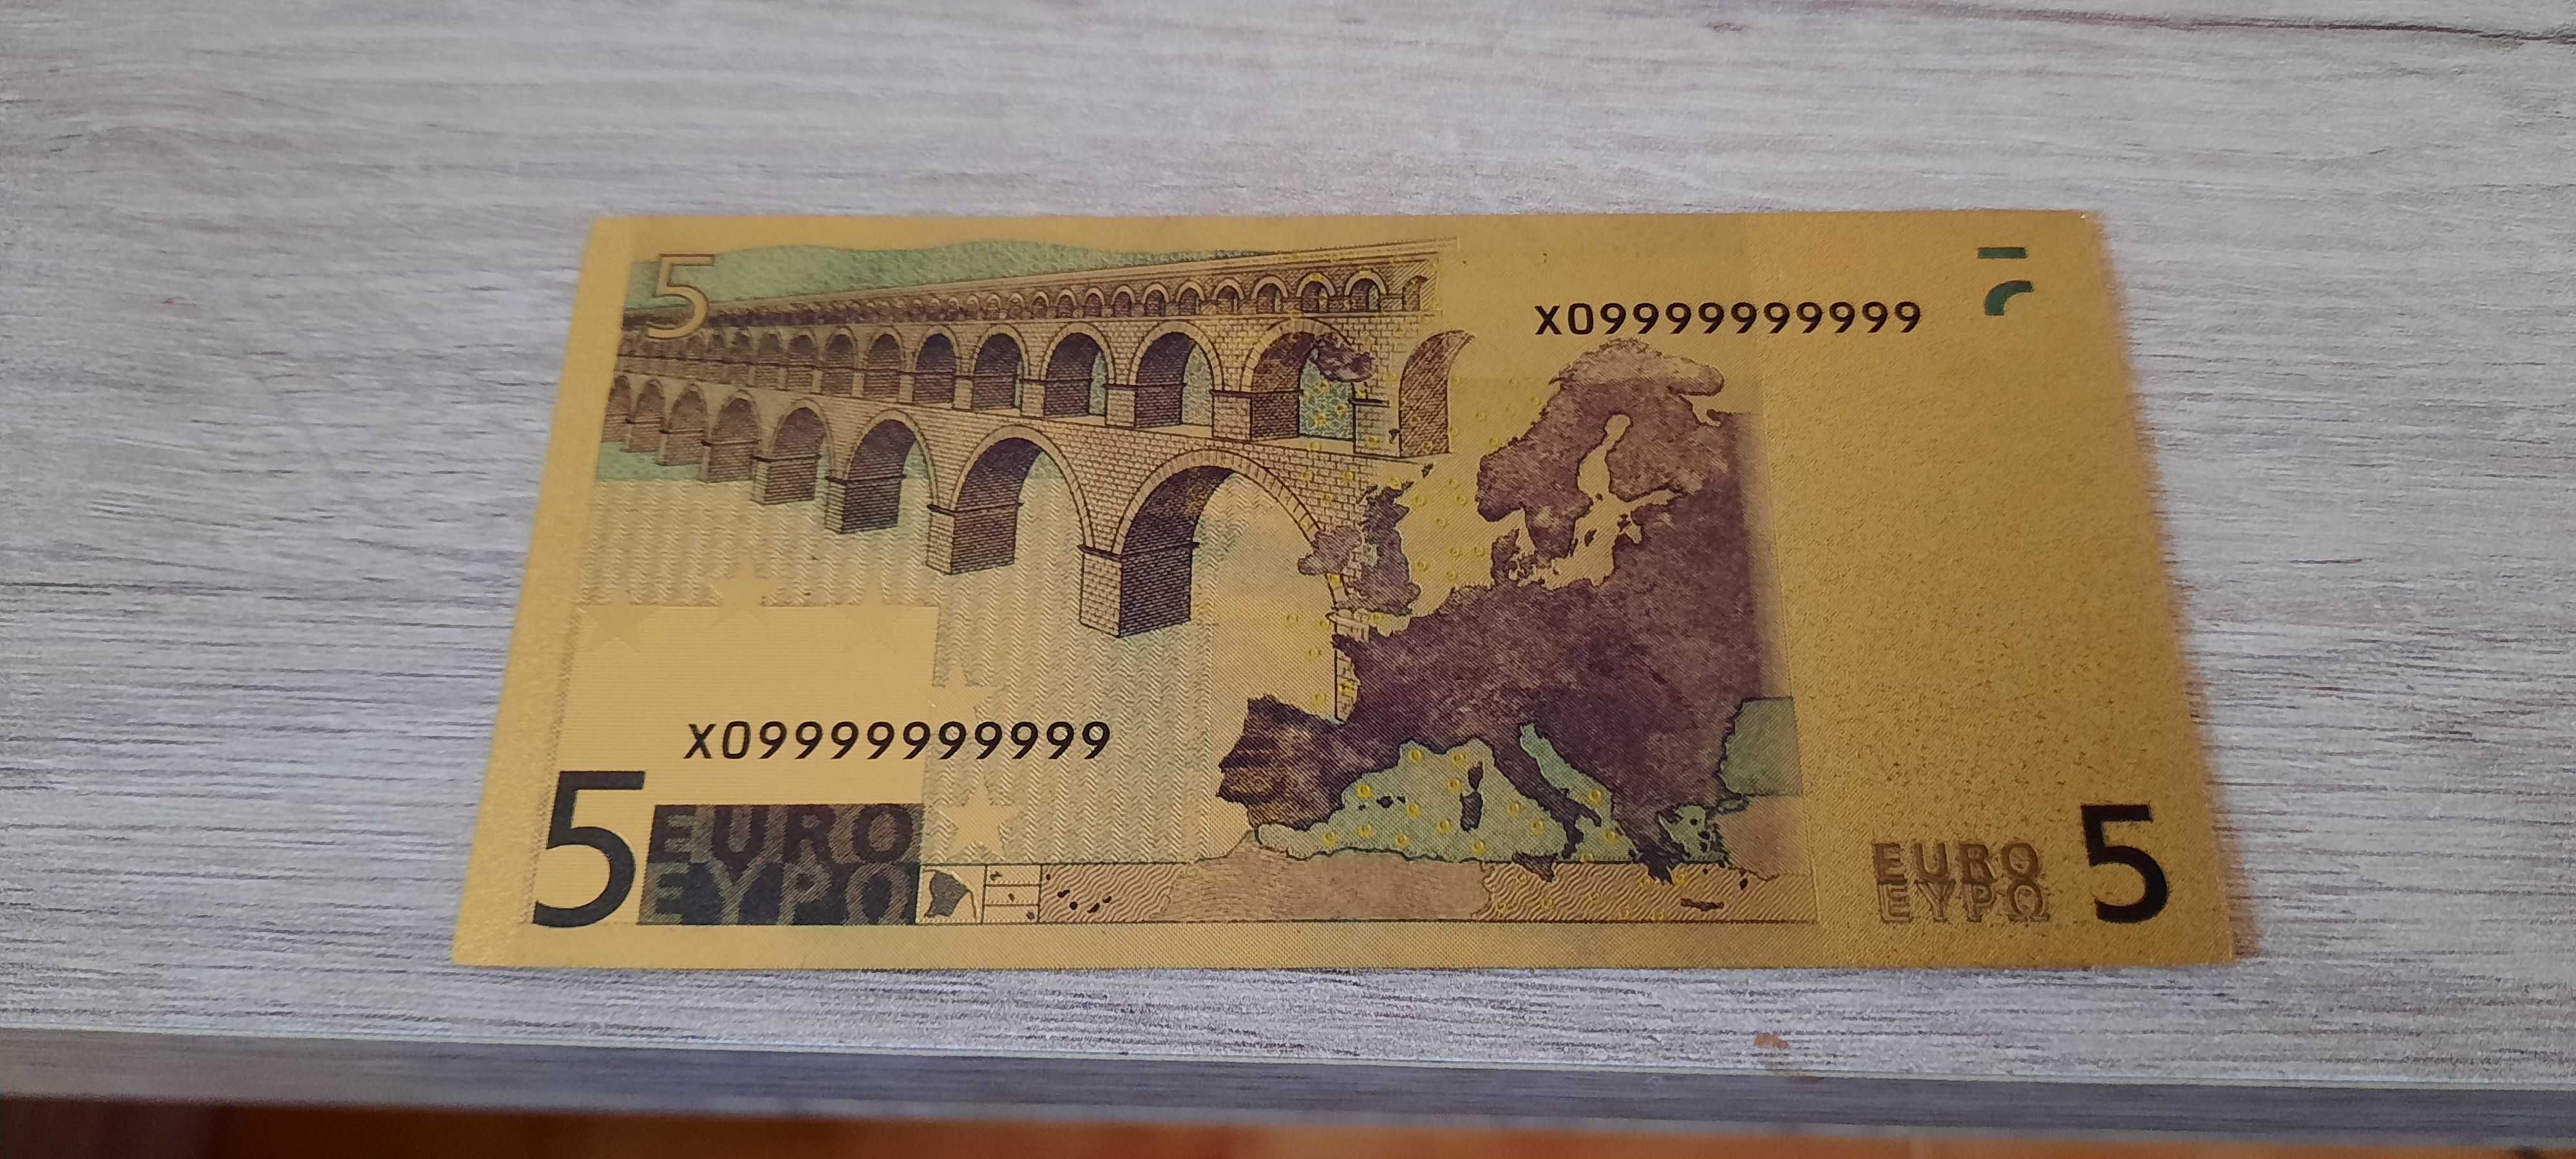 Nota 5 € dourada